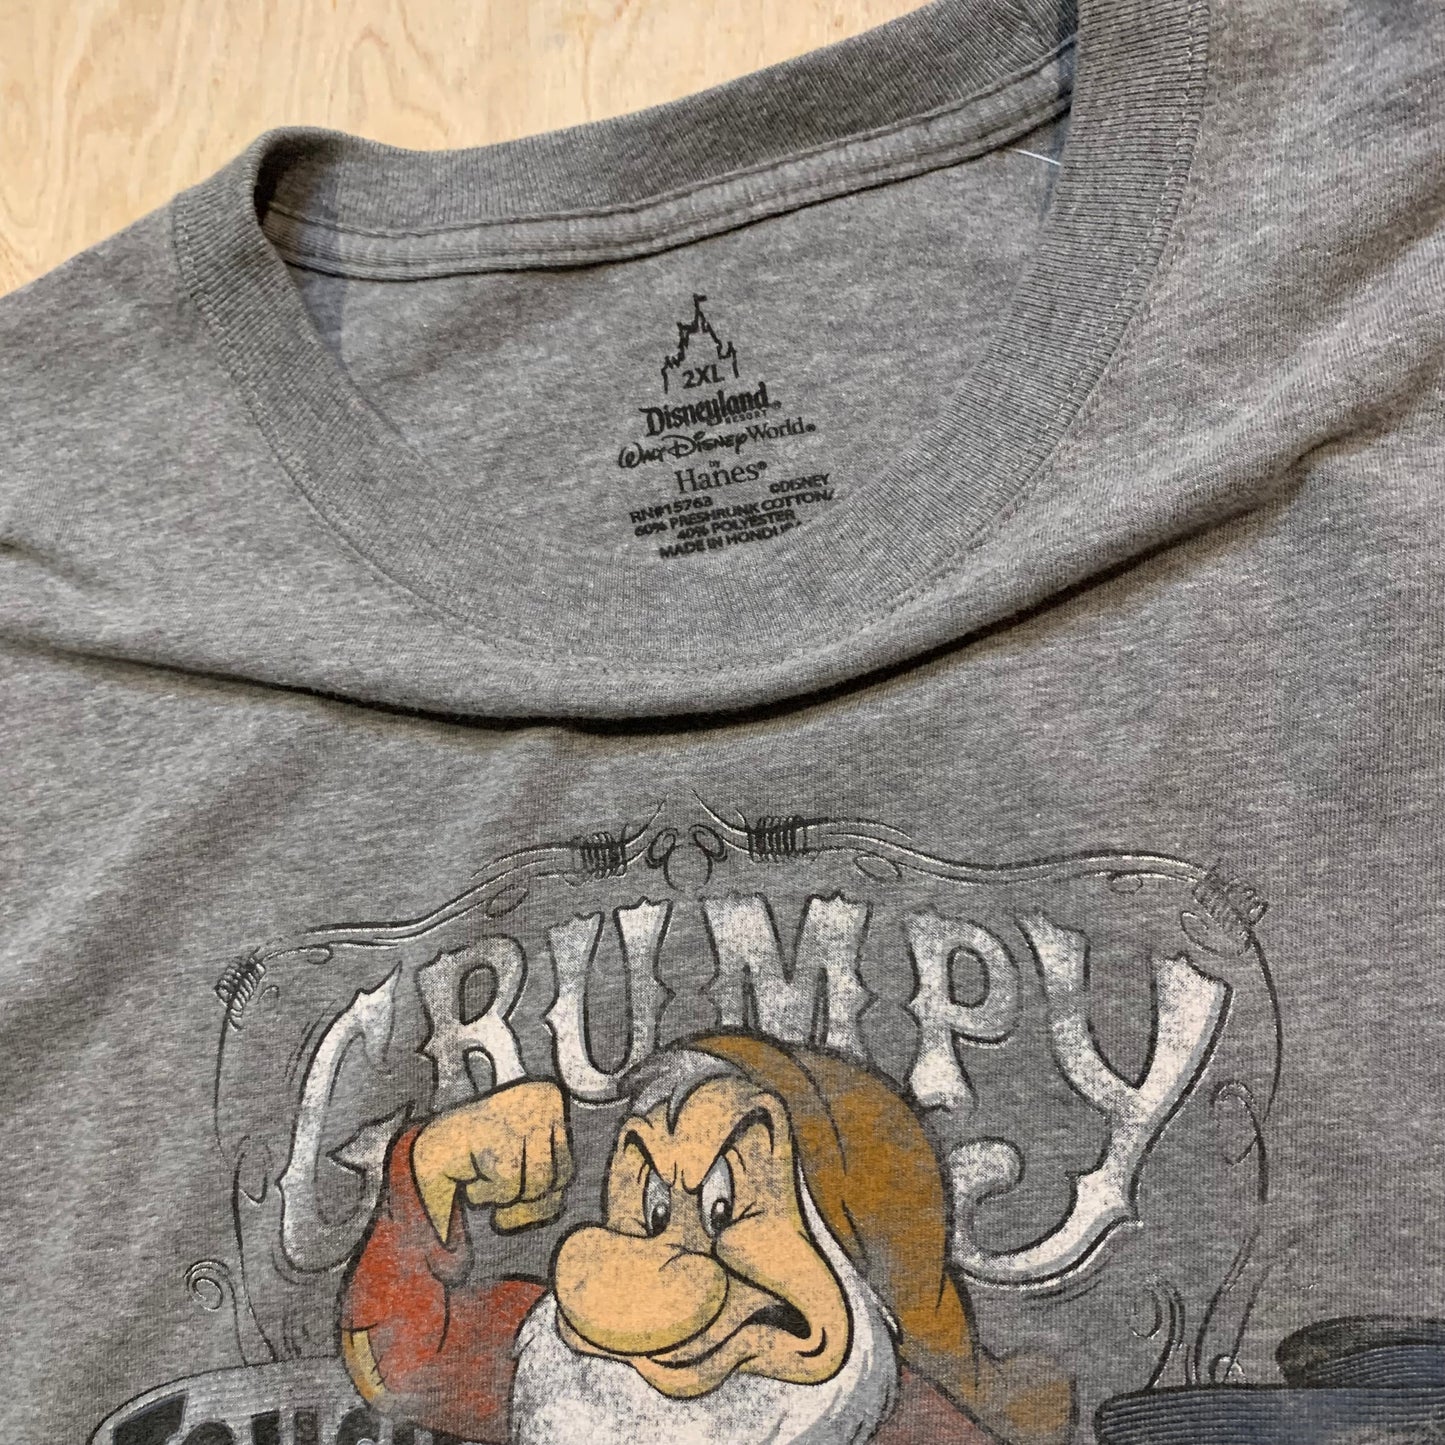 Disney's "Grumpy" Tough guy T-shirt